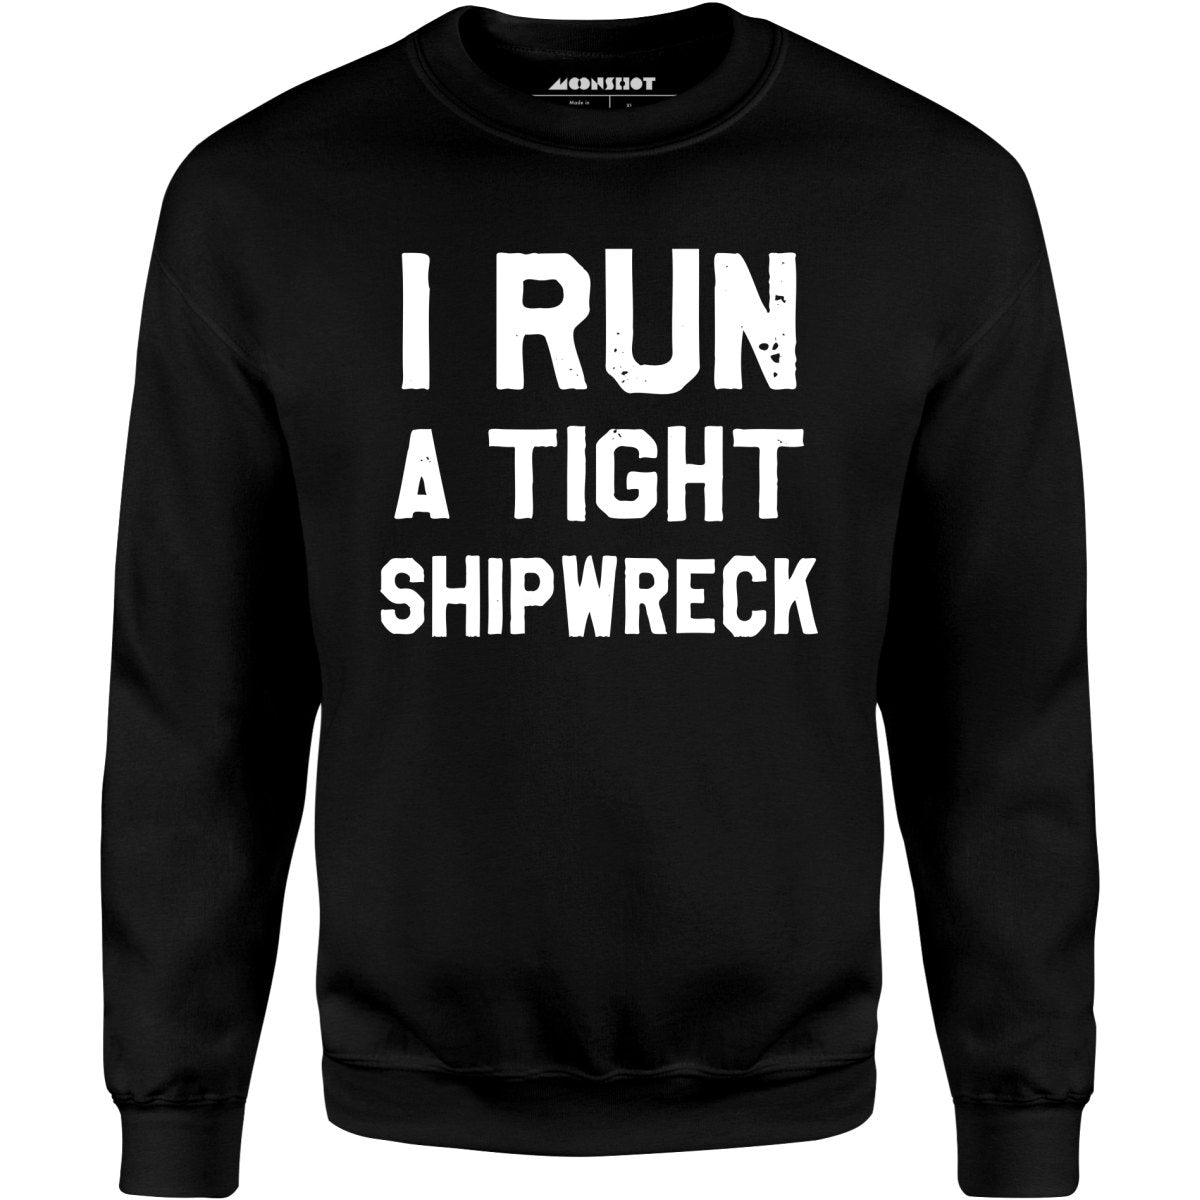 I Run a Tight Shipwreck - Unisex Sweatshirt